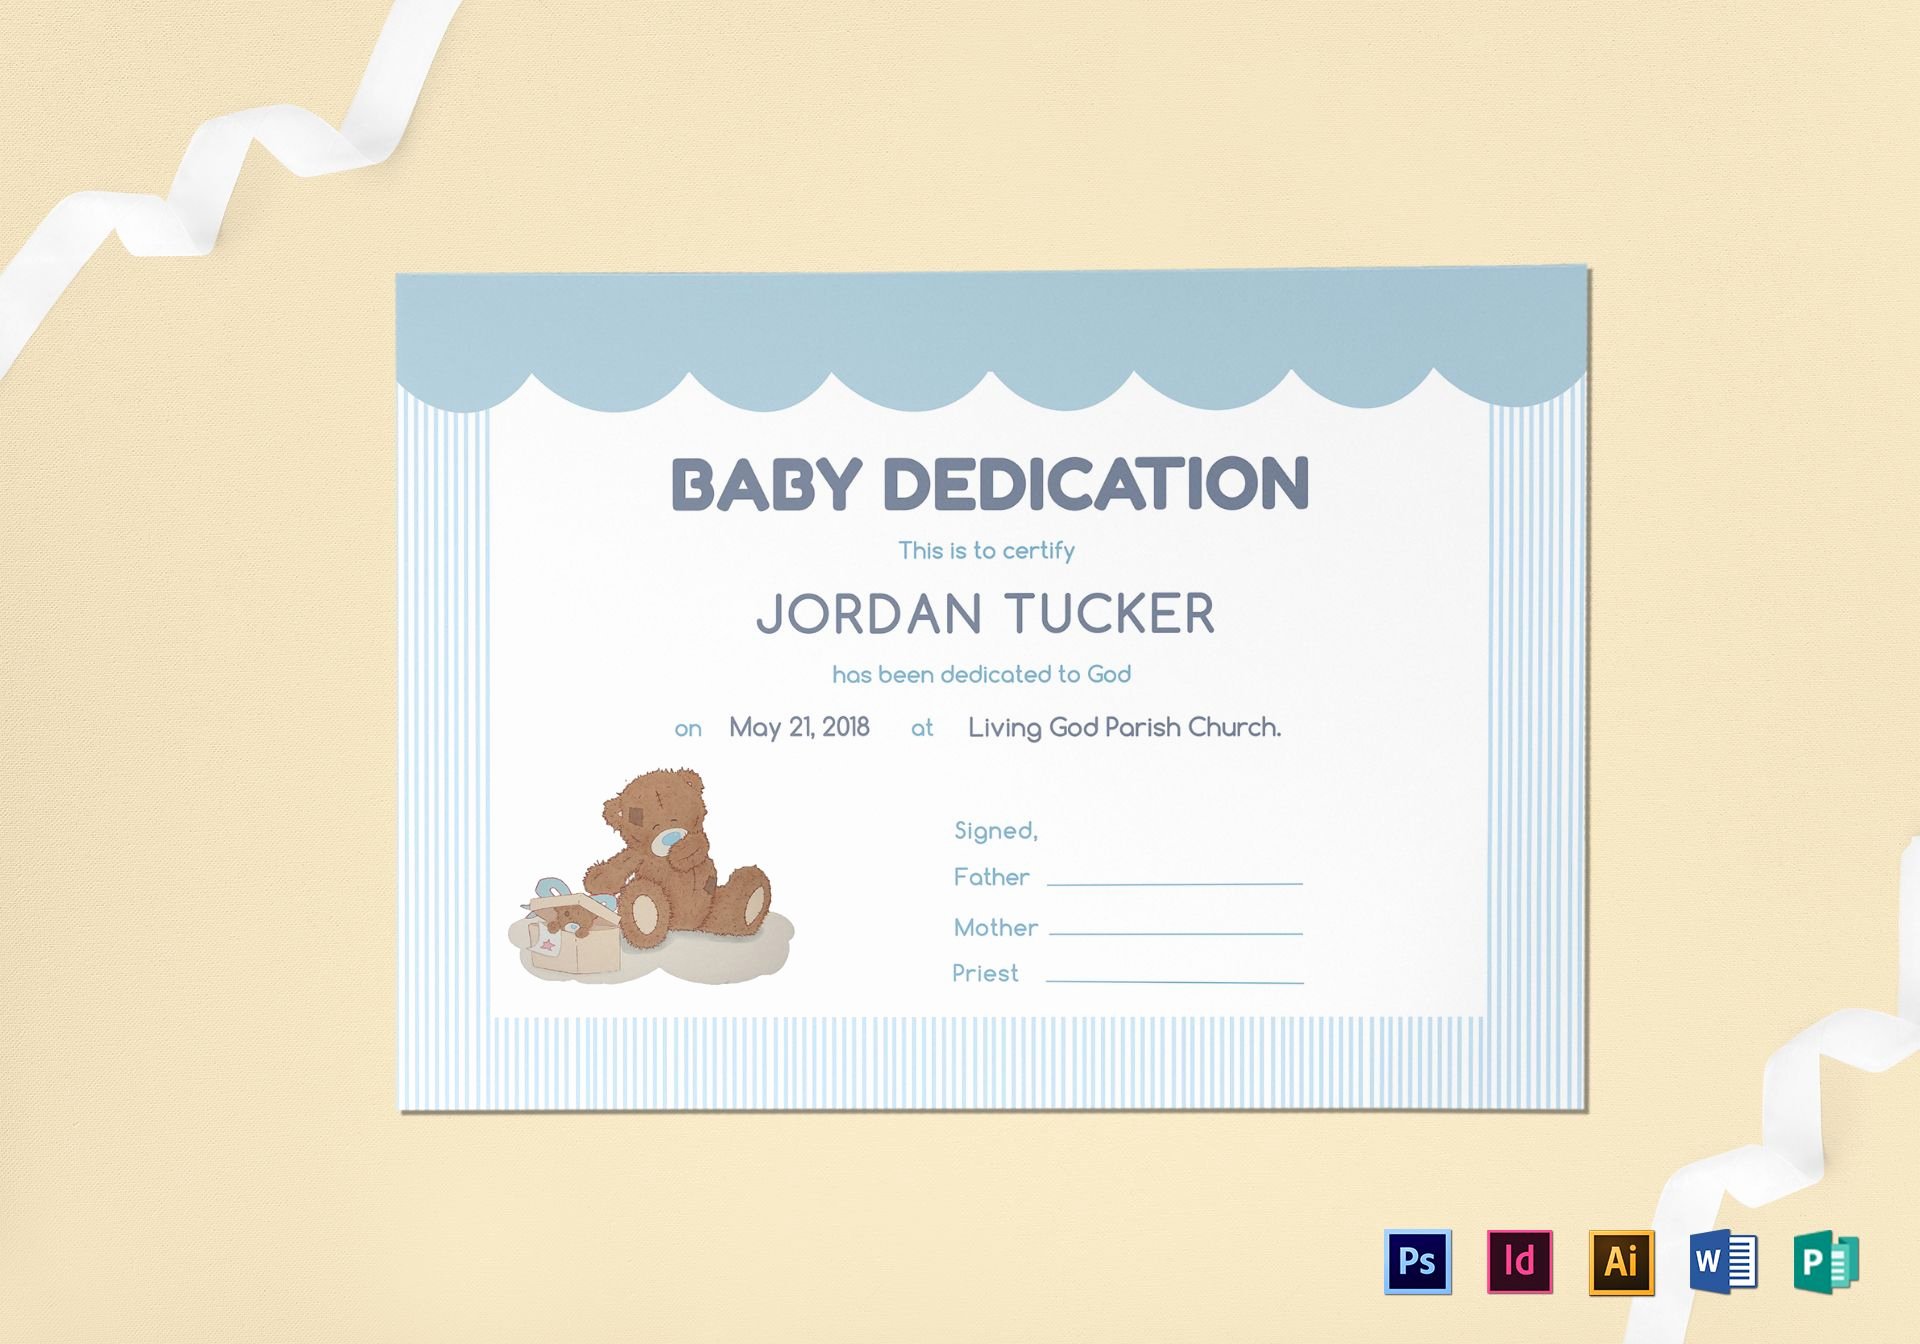 Child Dedication Certificate Templates Beautiful Baby Dedication Certificate Design Template In Psd Word